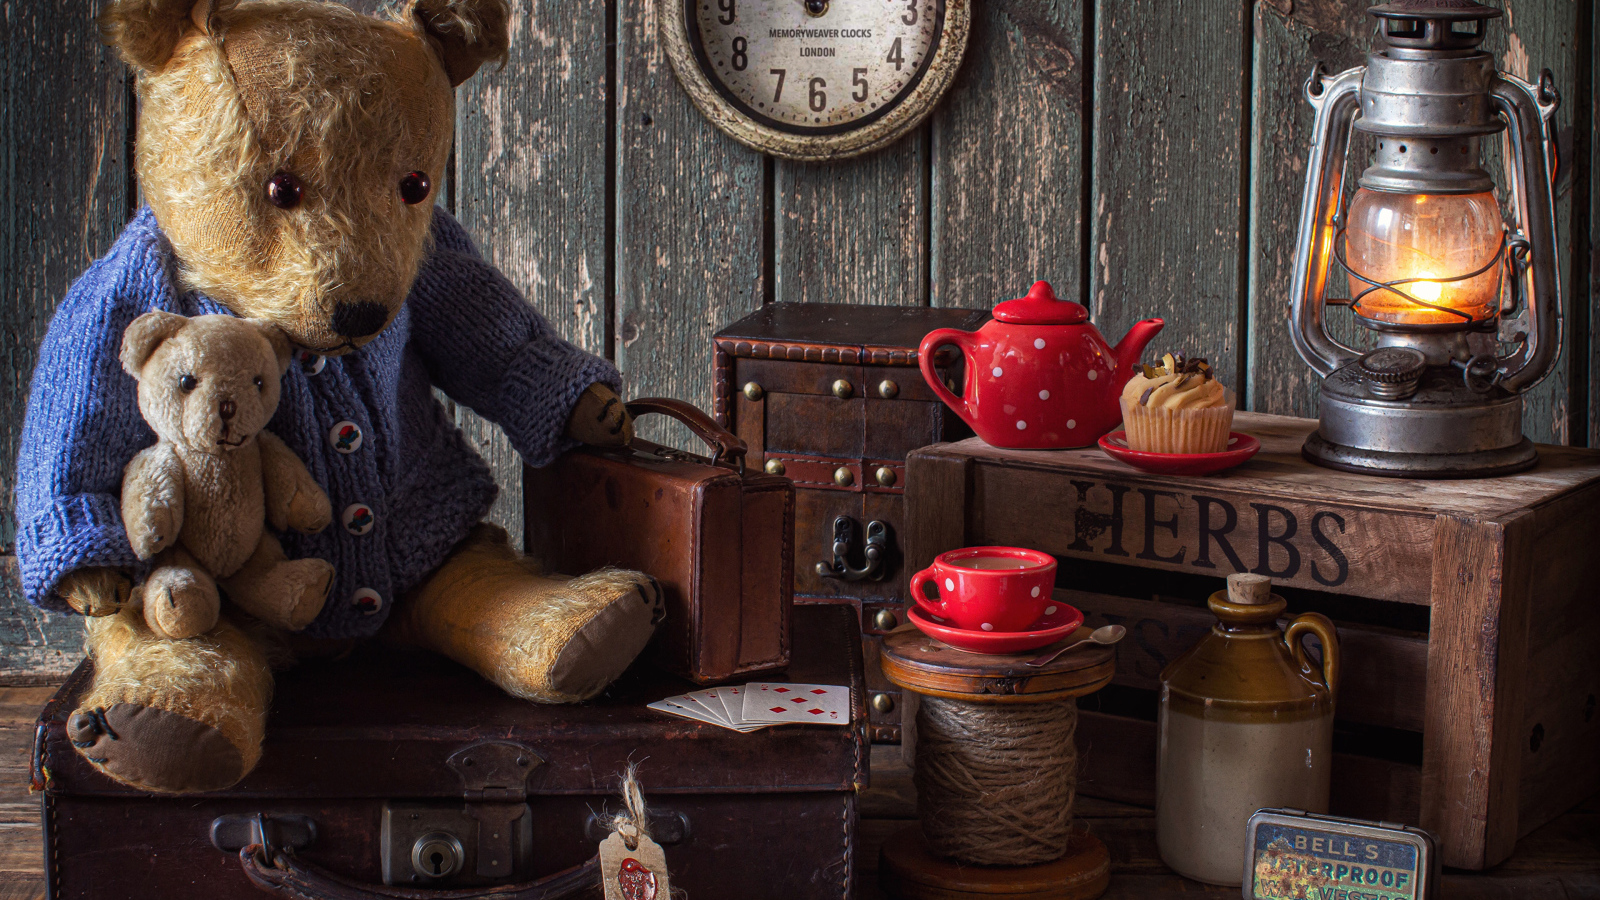 Old teddy bear with toys on the table